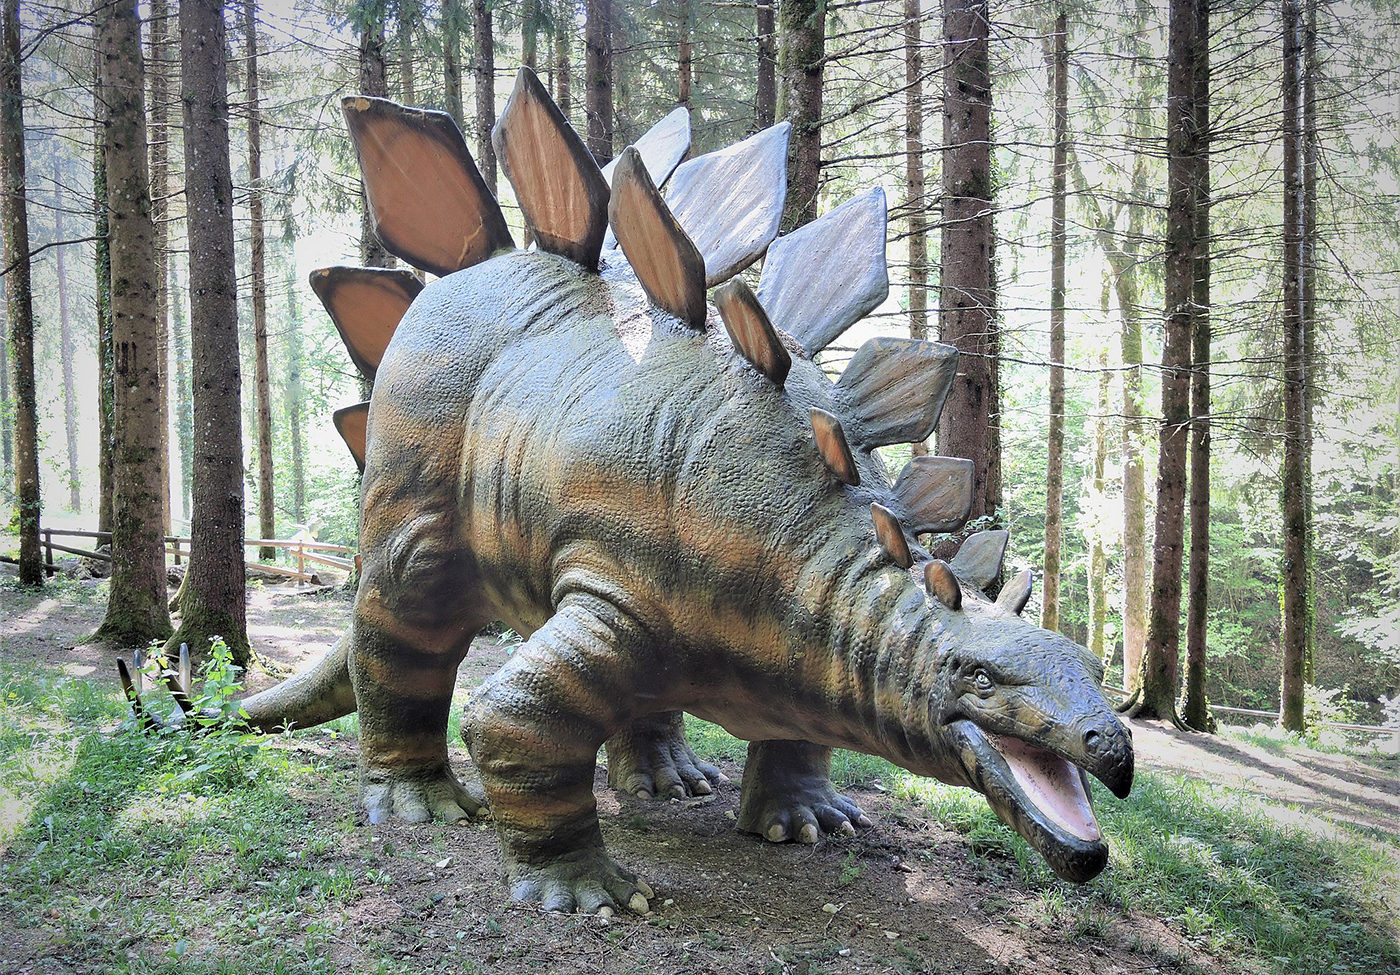 Photo of a Stegosaurus recreation, by Espirat via Wikimedia Commons.